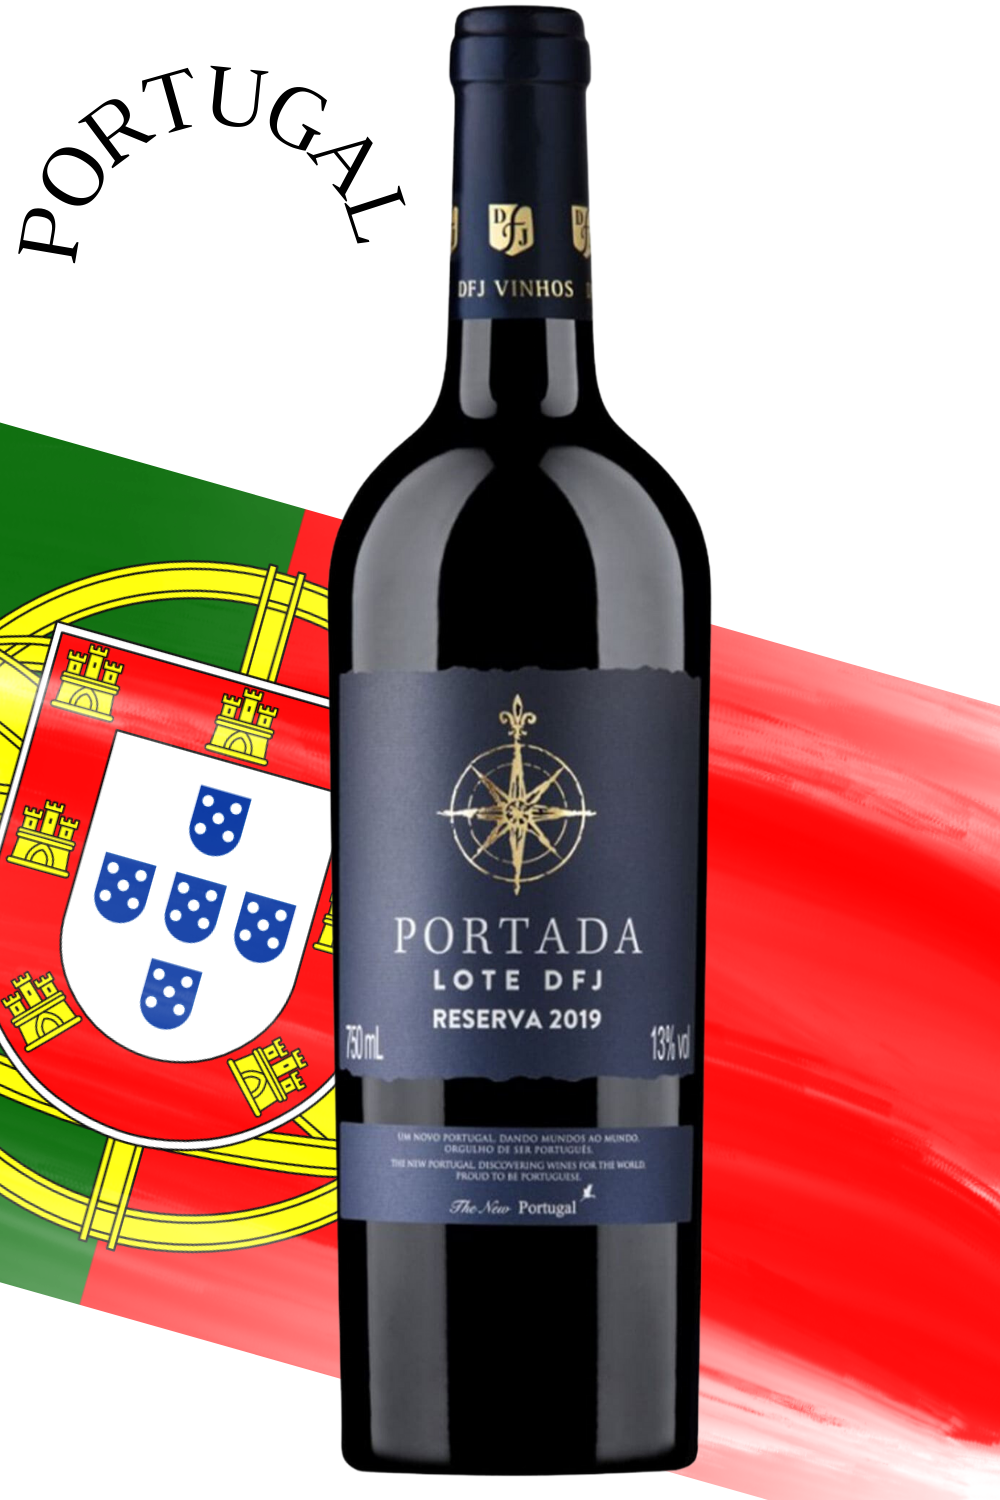 Vinho Portada Lote Dfj Reserva - adegaalmeida.com.br - Adega Almeida